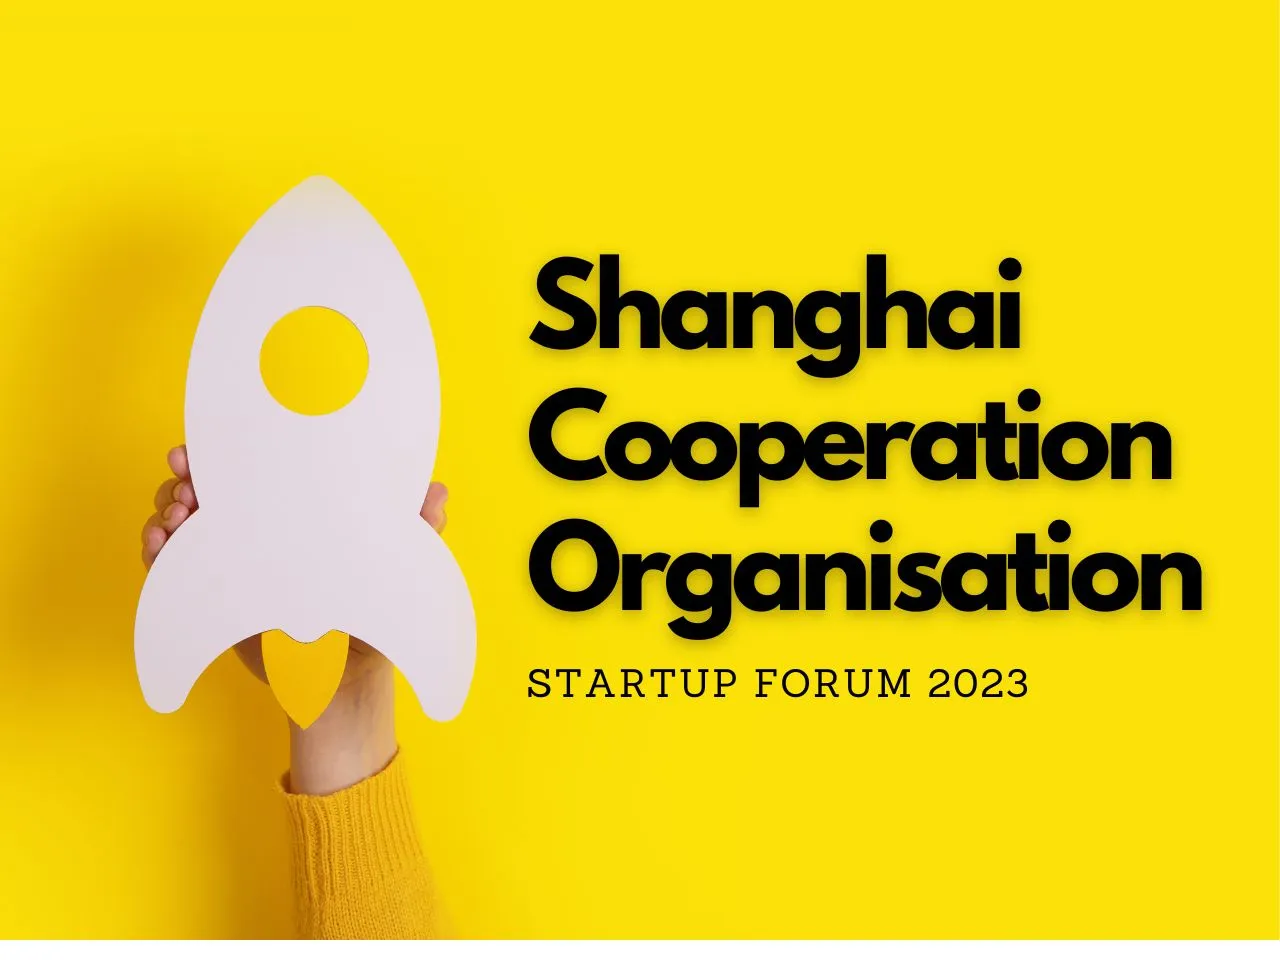 Key Highlights of Shanghai Cooperation Organisation Startup Forum 2023